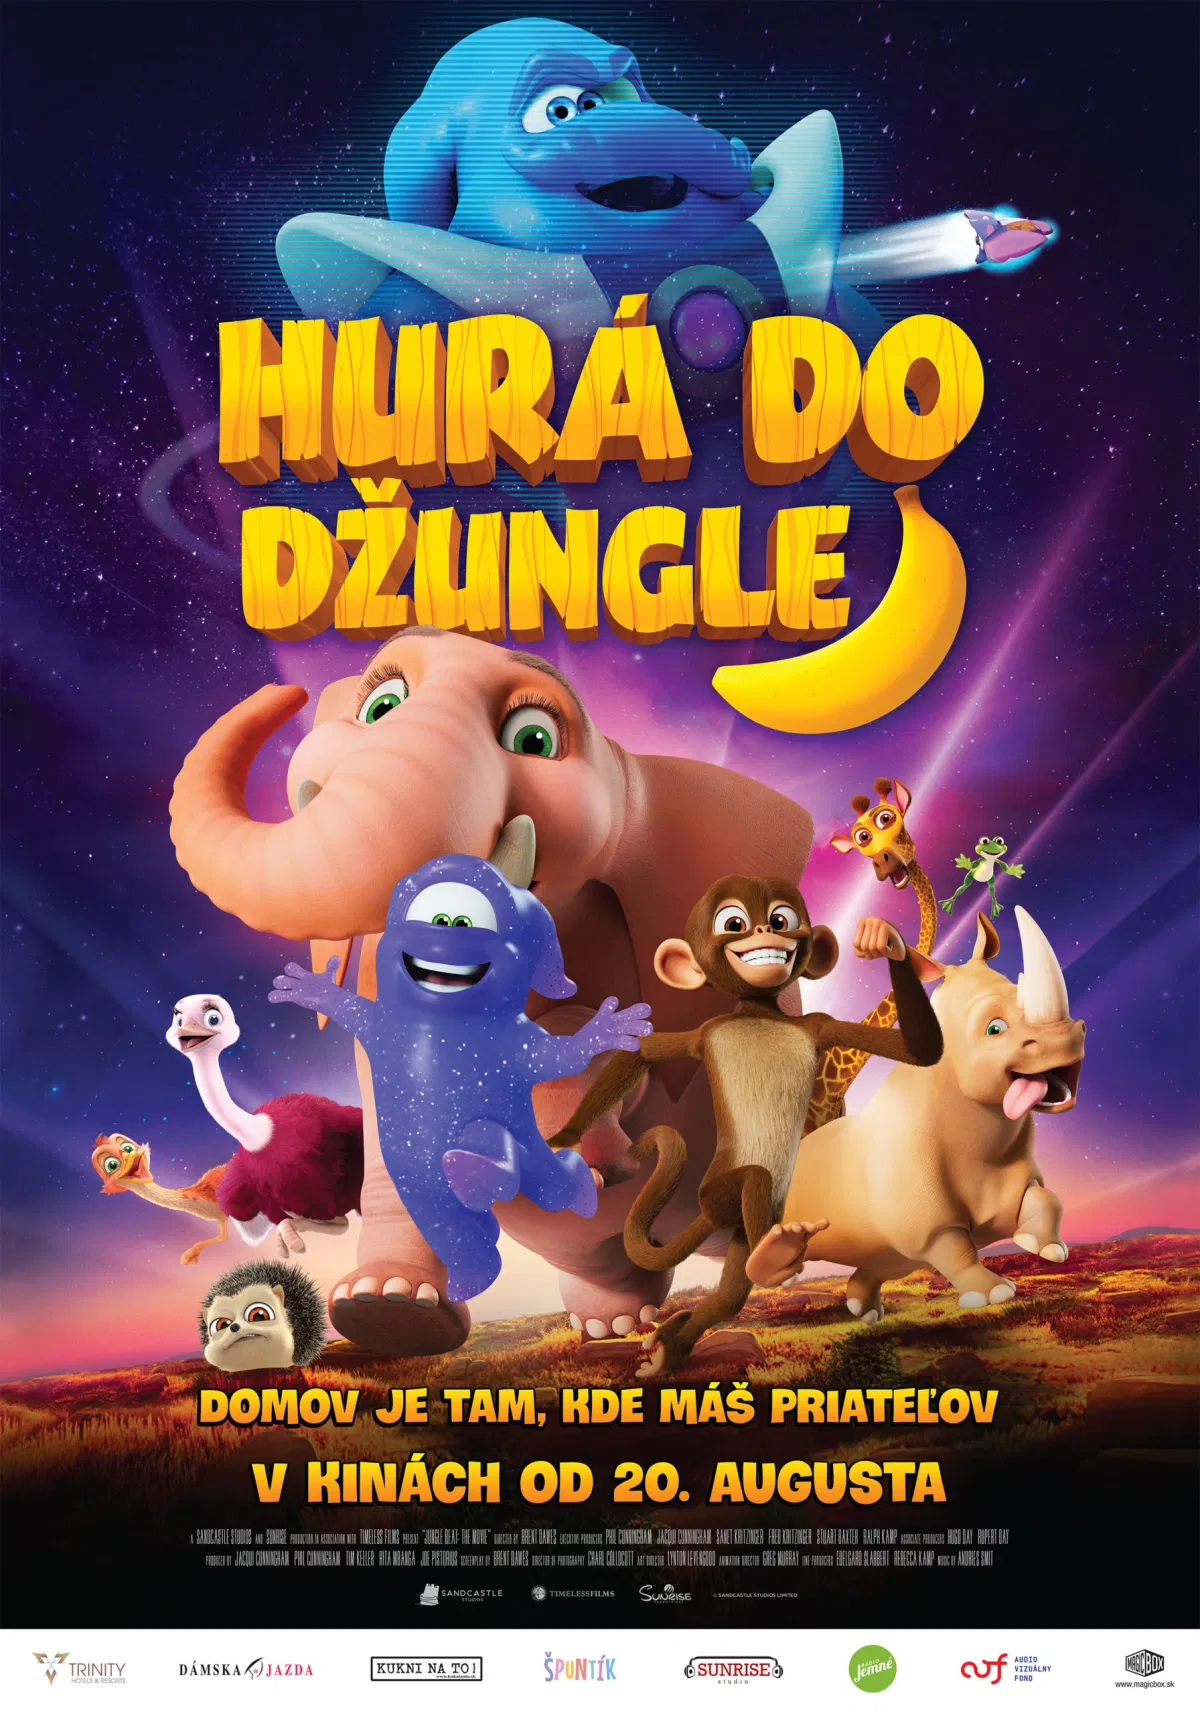 Stiahni si Filmy Kreslené Hura do dzungle / Jungle Beat: The Movie (2020)(CZ/SK)[WebRip][720p] = CSFD 54%